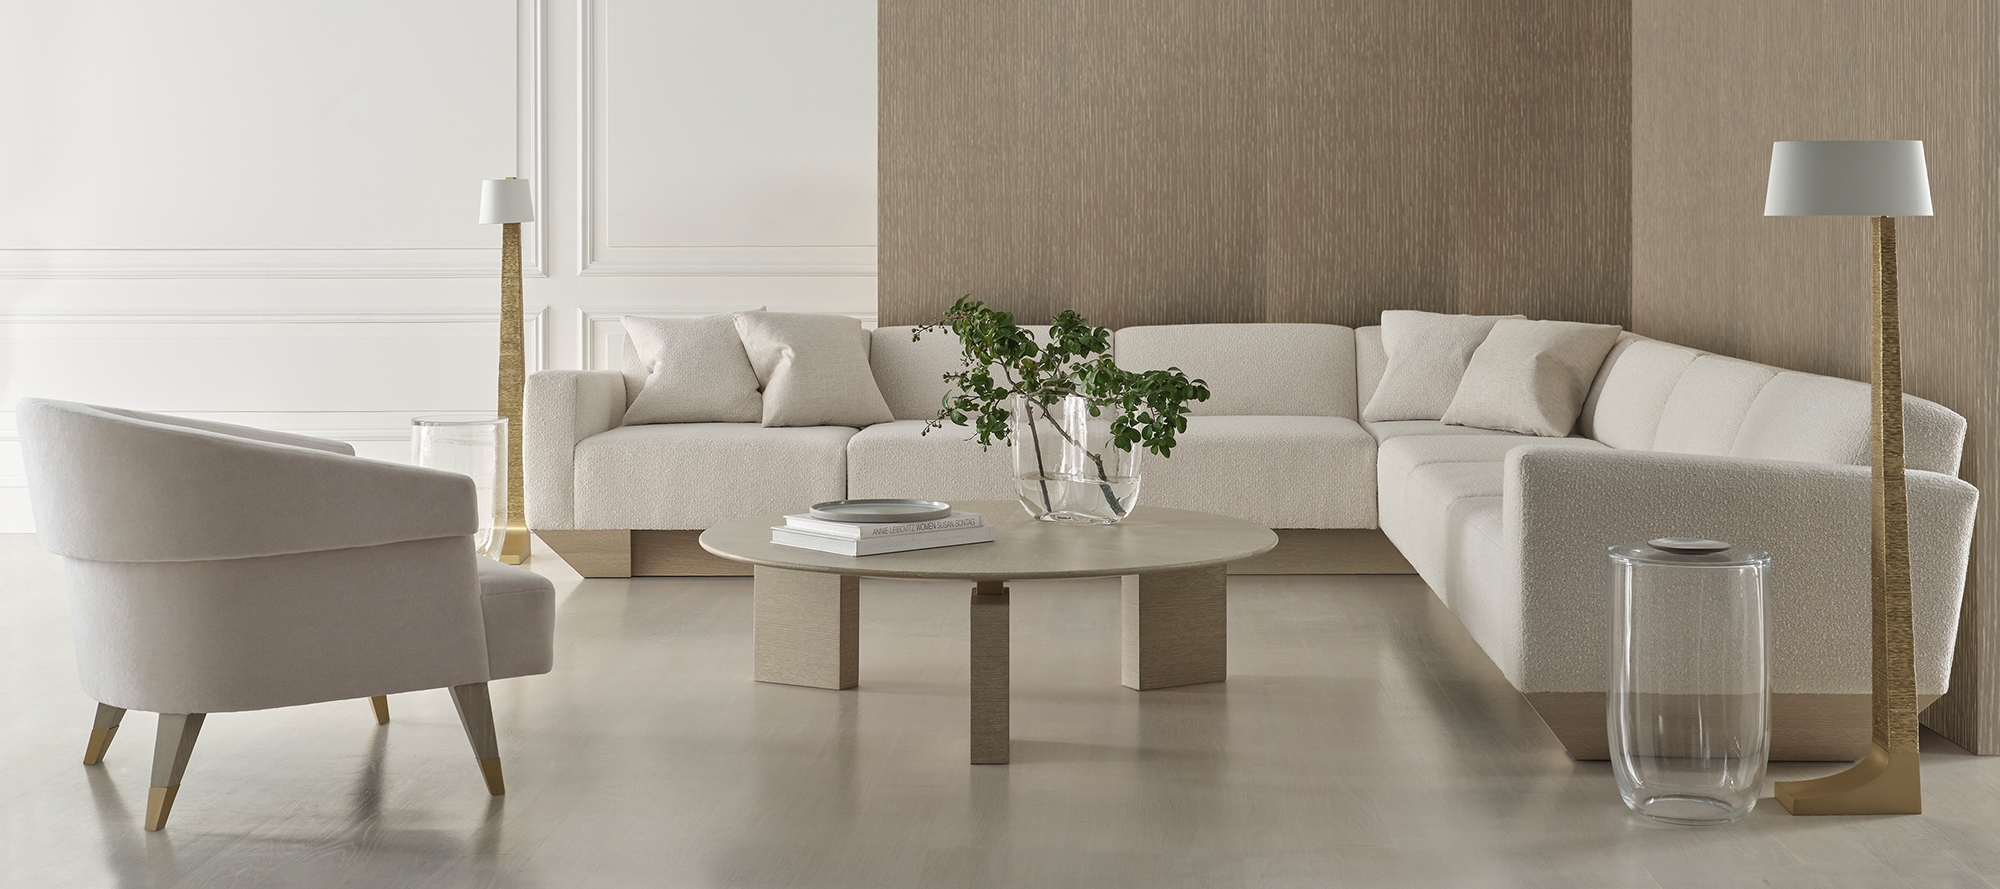 Sectionals - Modern Living Room Furniture & Accessories | Baker Furniture